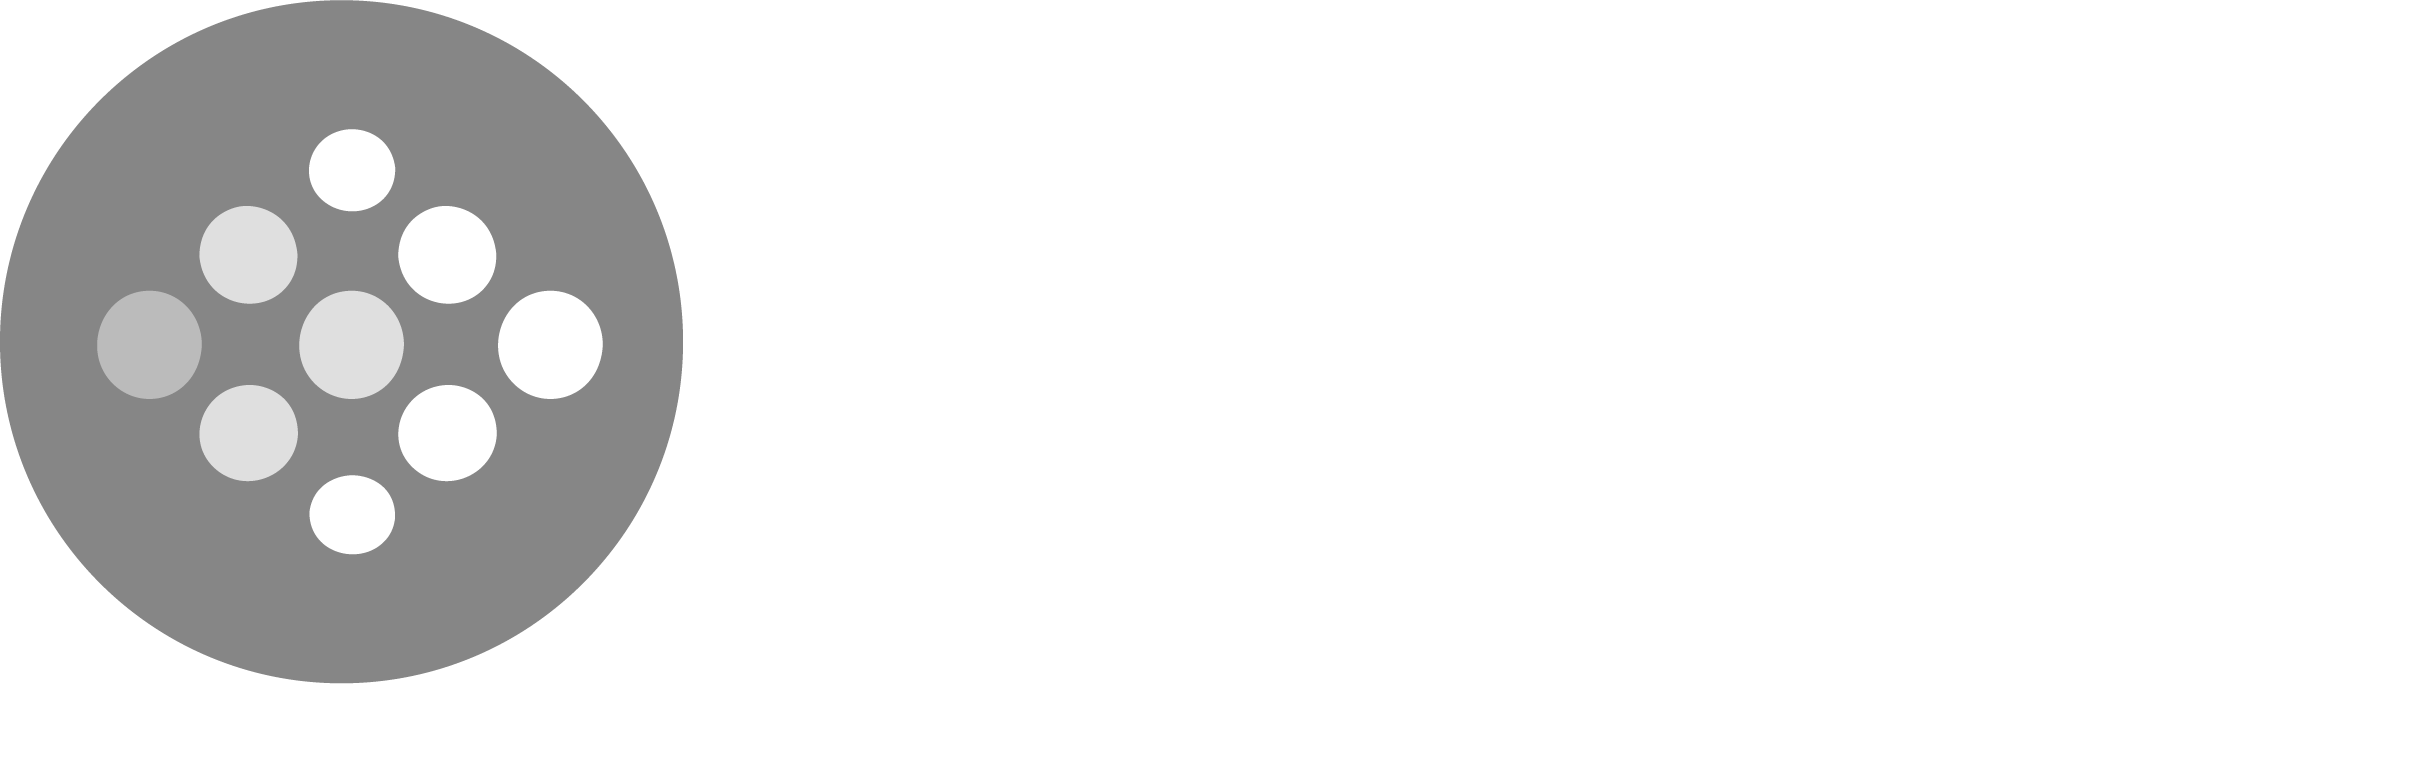 hpcc